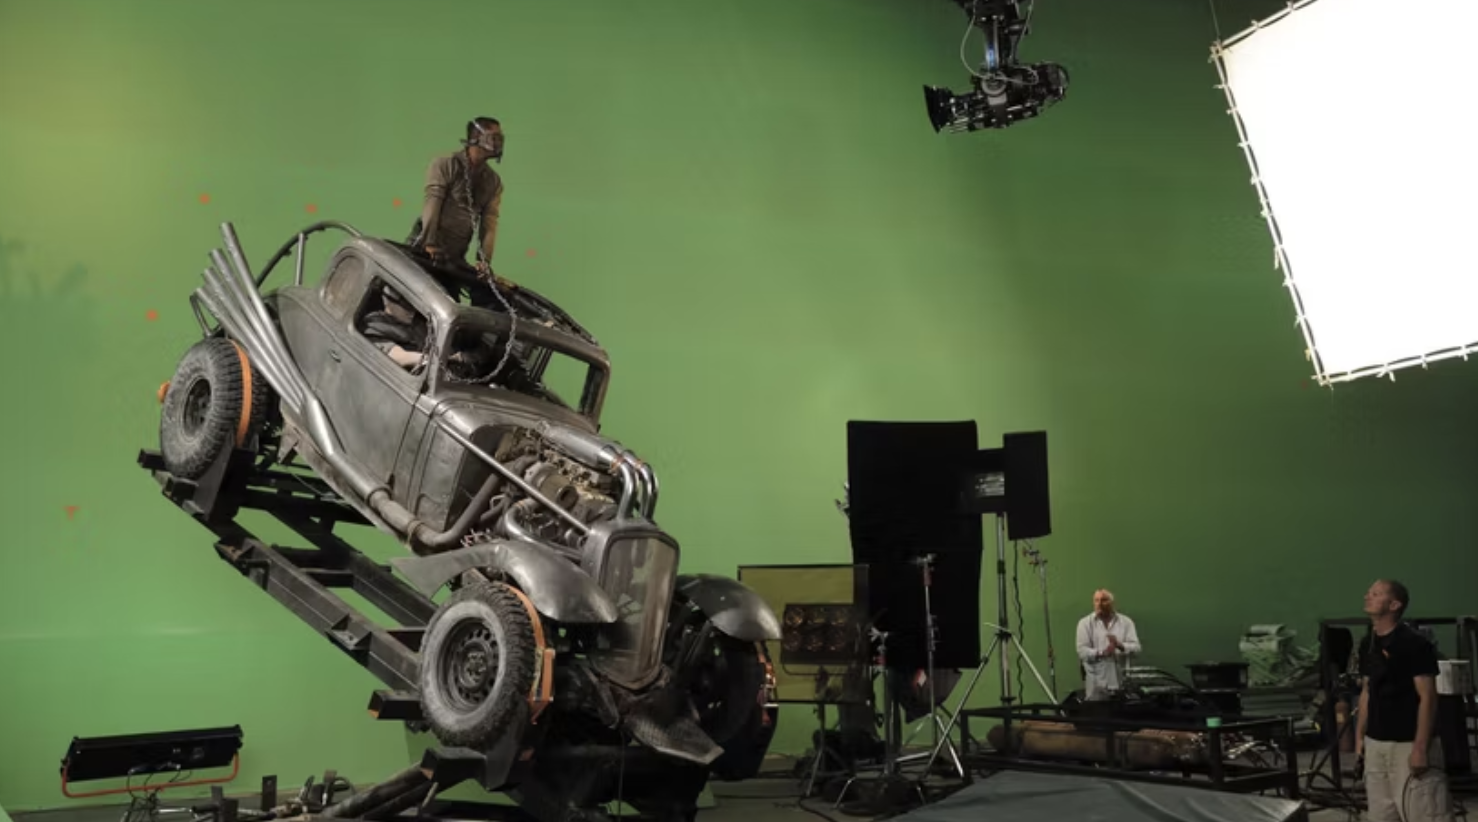 Behind the scenes of "Mad Max: Fury Road", circa 2015.